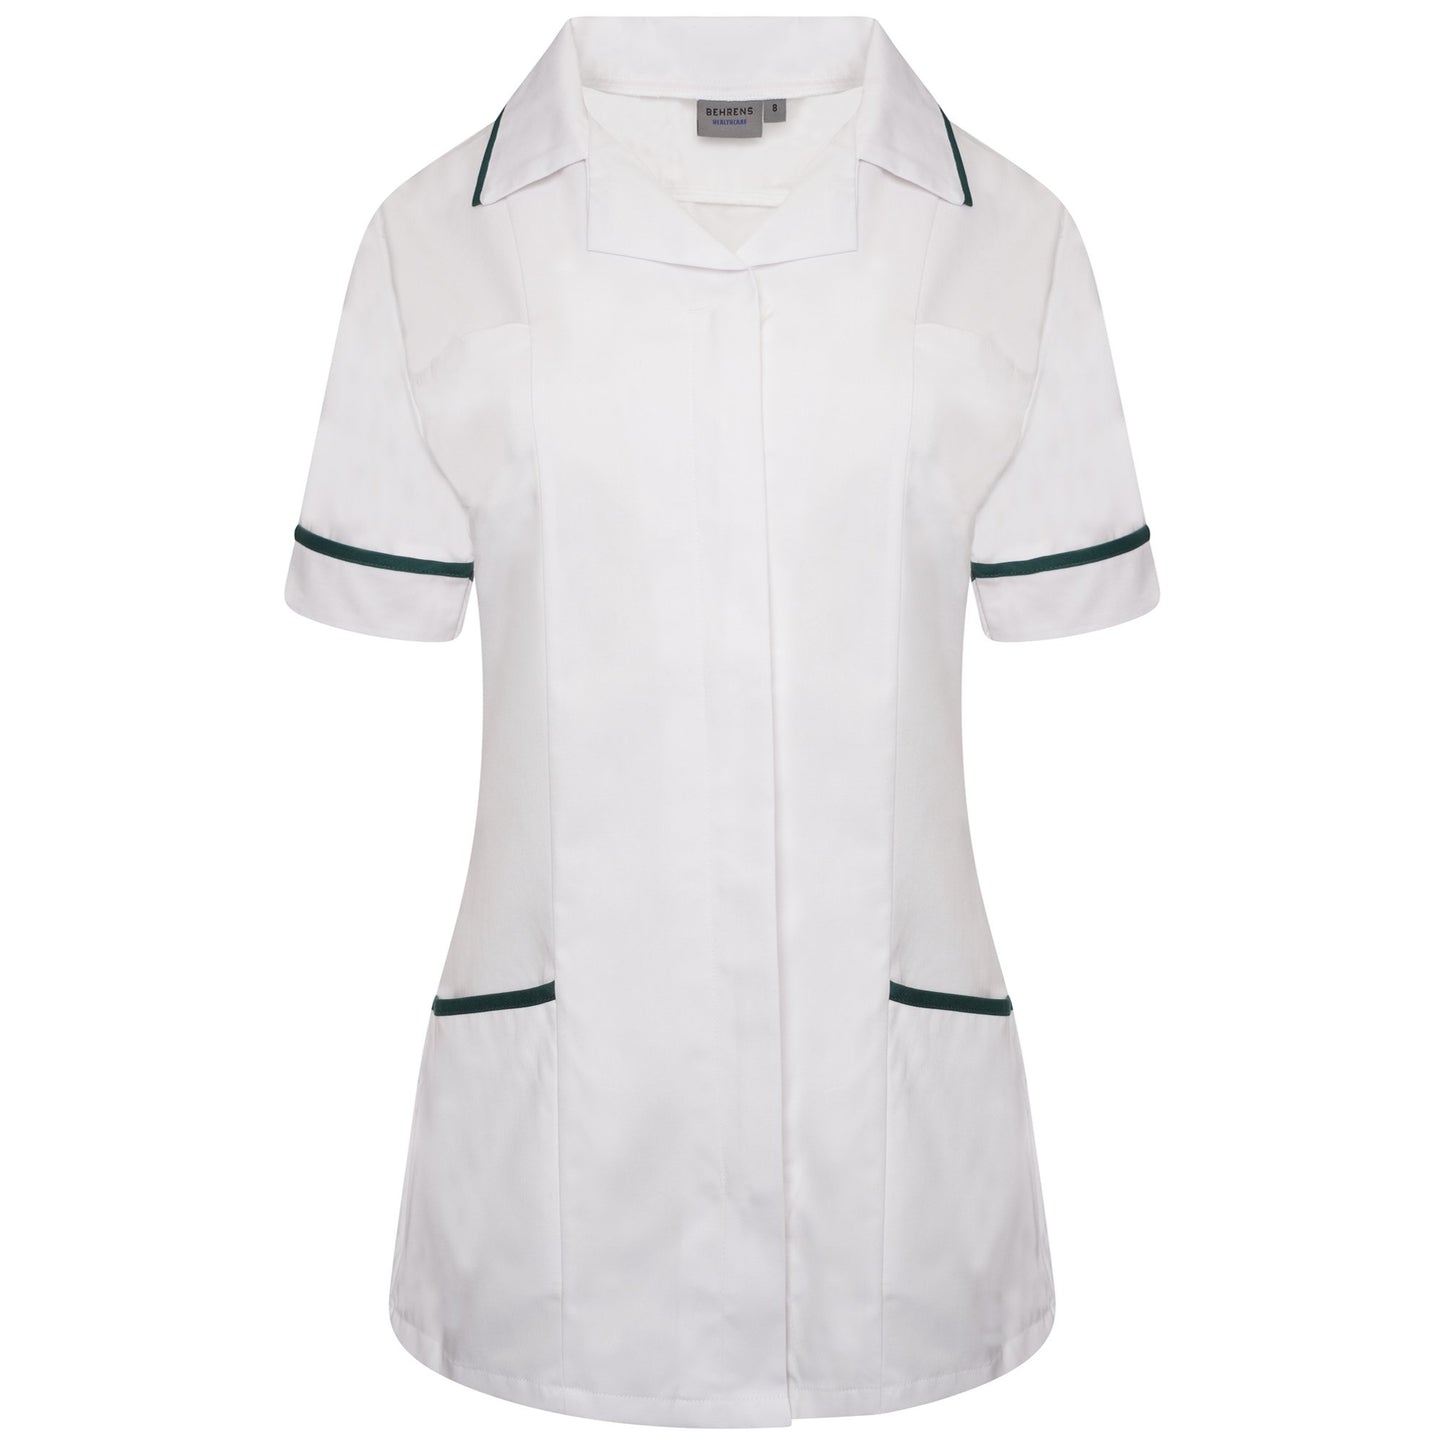 Behrens Ladies Revere Nurses Tunic - NCLTPSR - White/Bottle Green Trim - UK 8